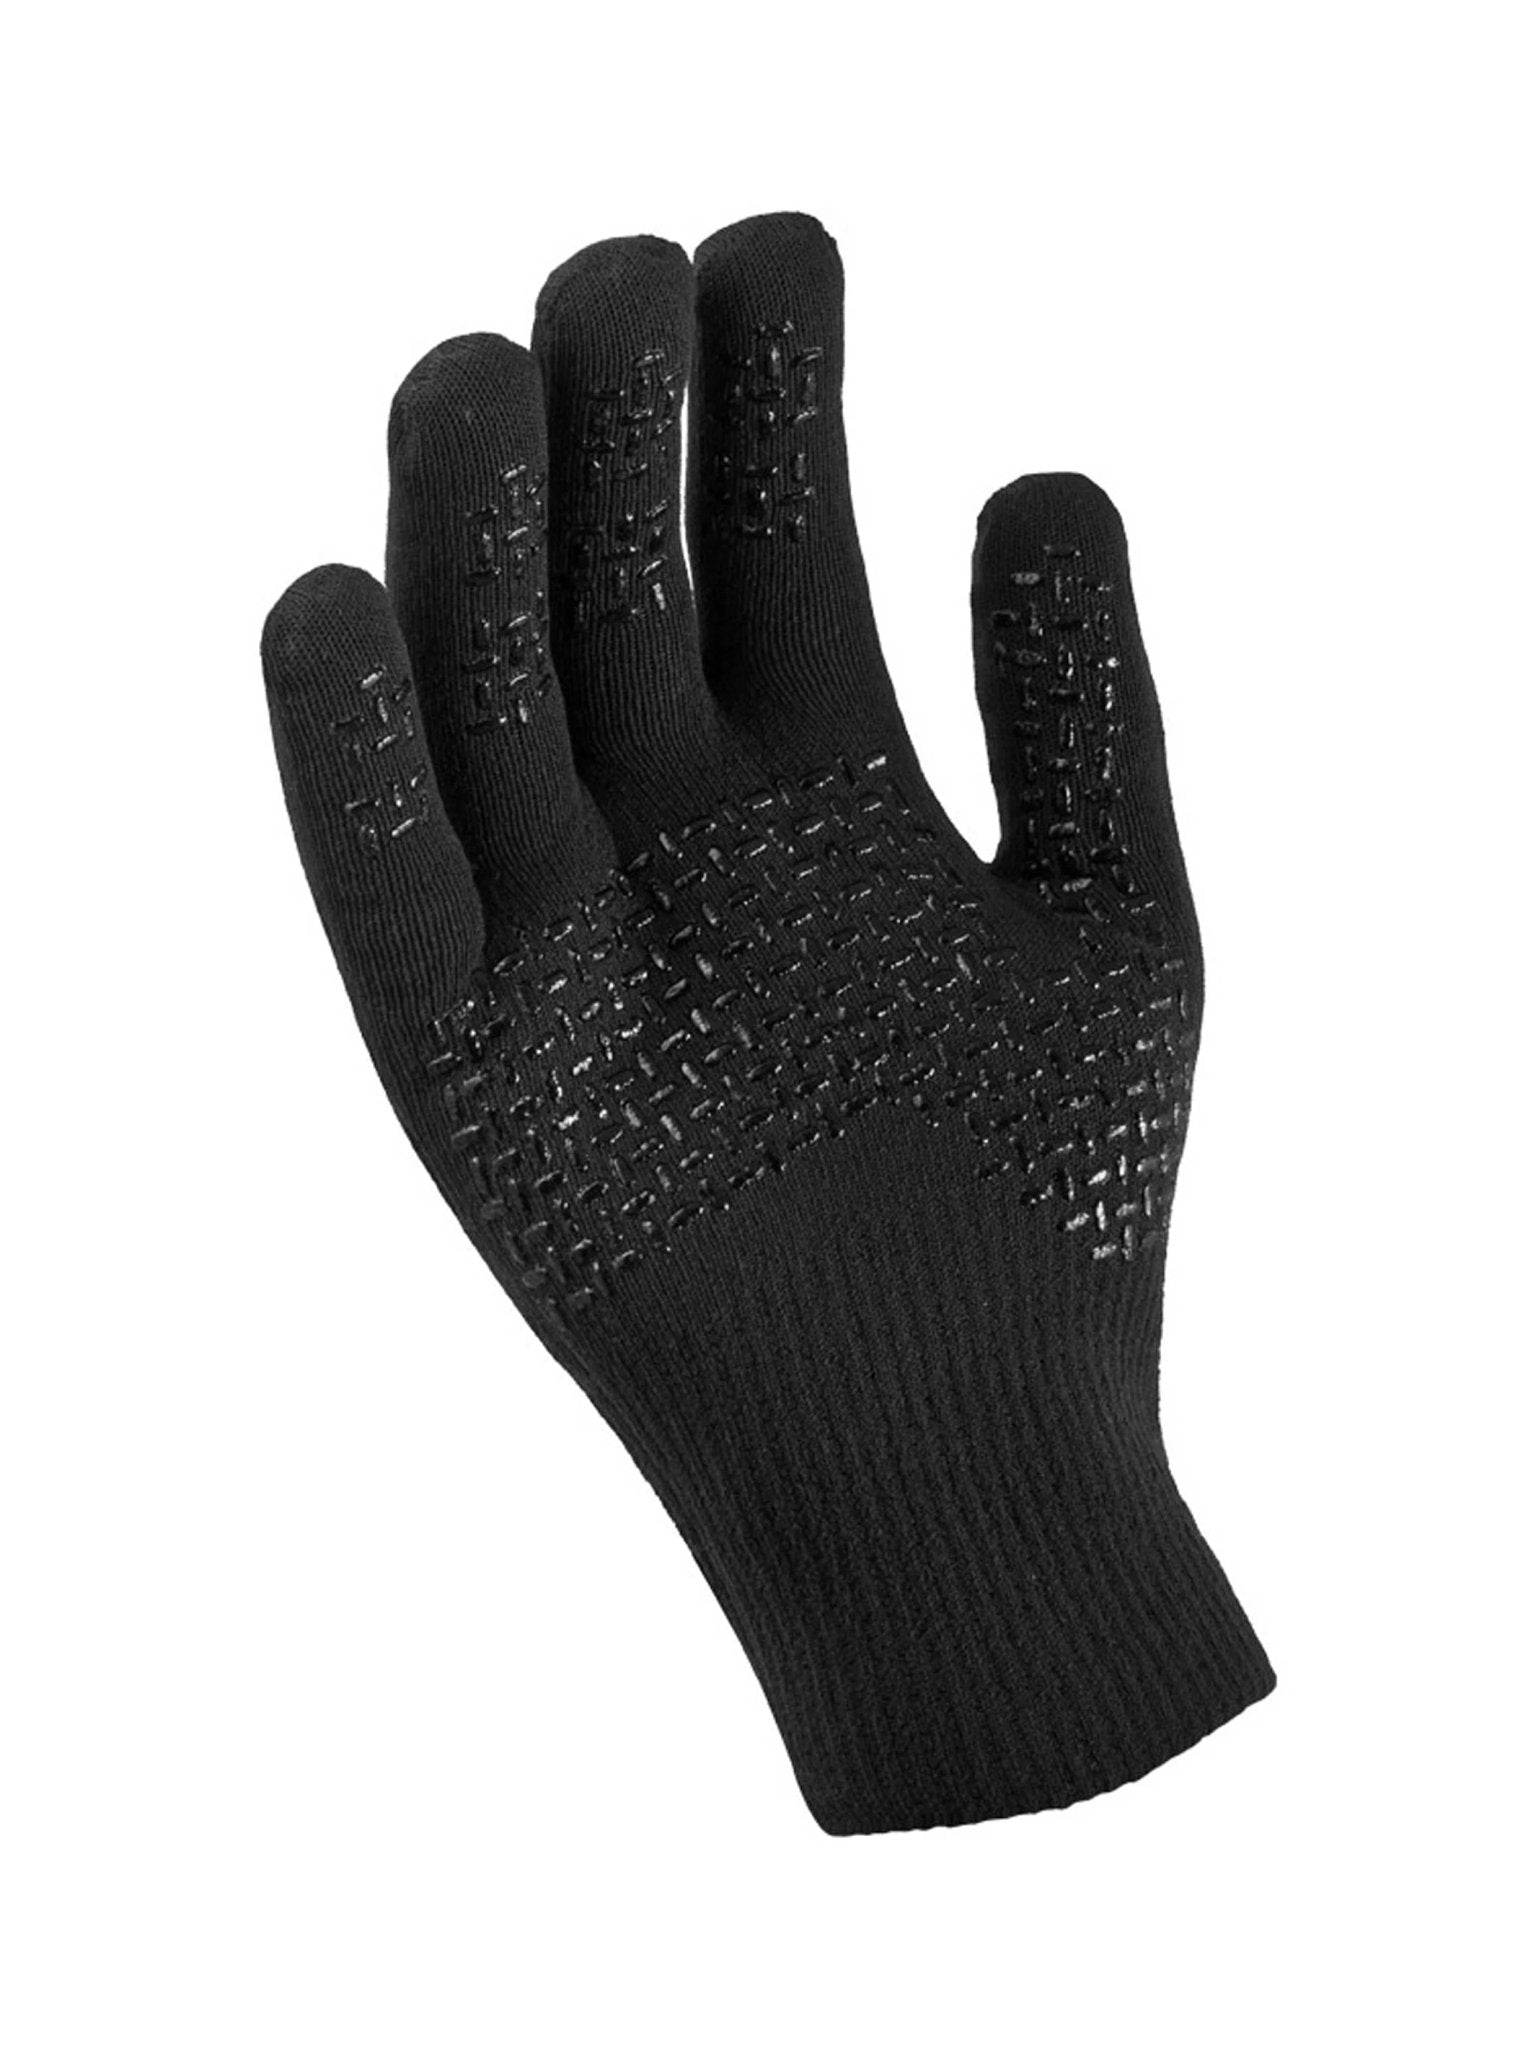 4elementsclothingSealSkinzSealSkinz - Waterproof Gloves all weather Ultra Grip knit Grip GloveGloves12100082000110